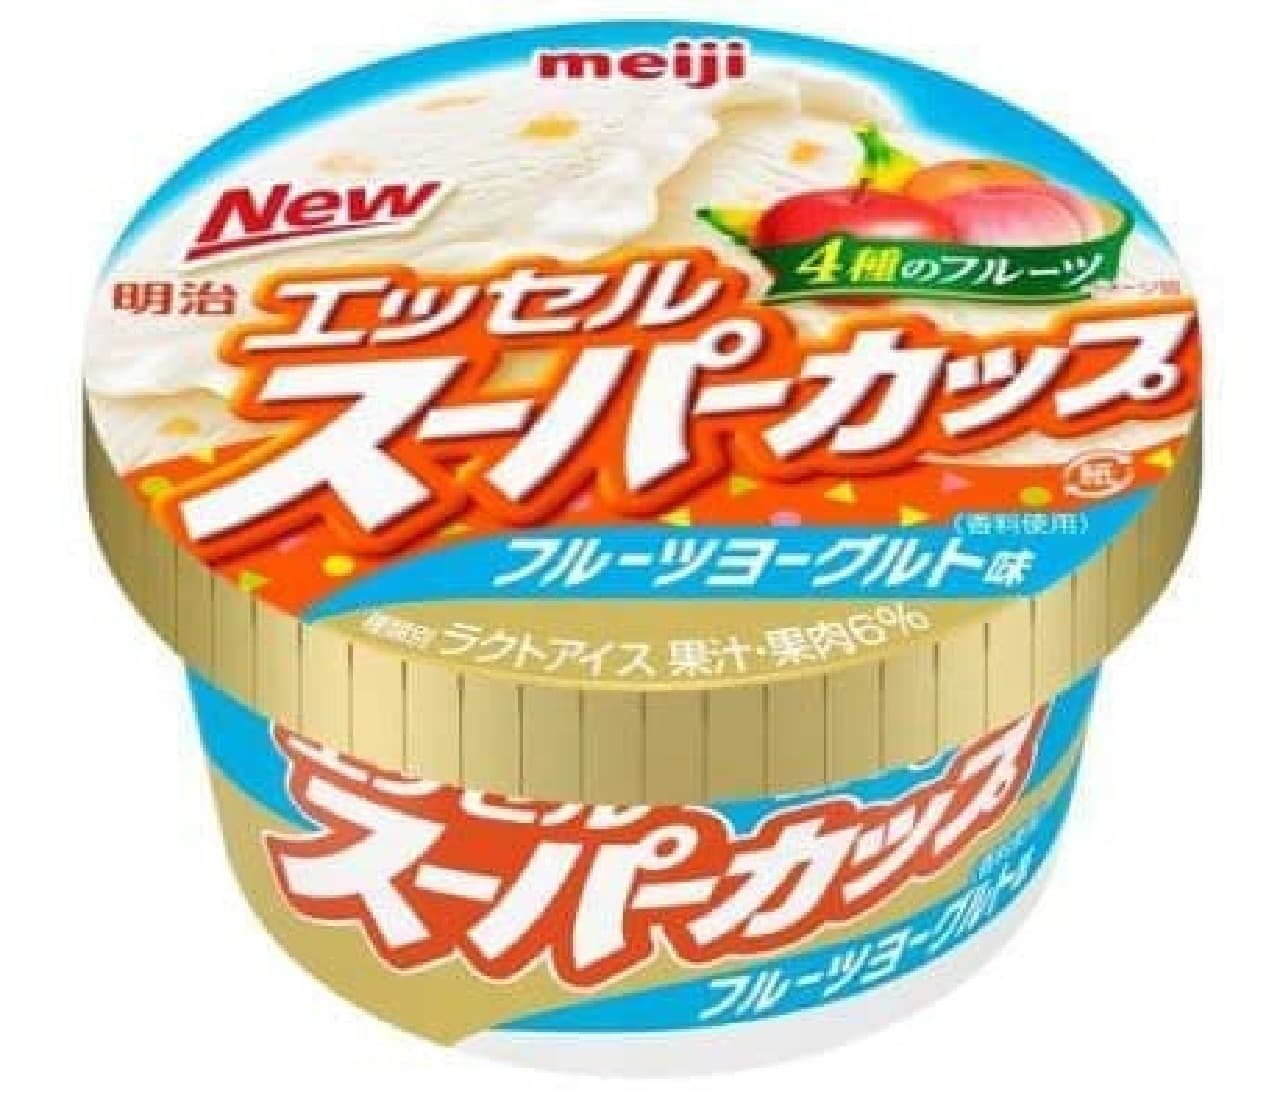 Meiji Essel Super Cup Fruit Yogurt Flavor